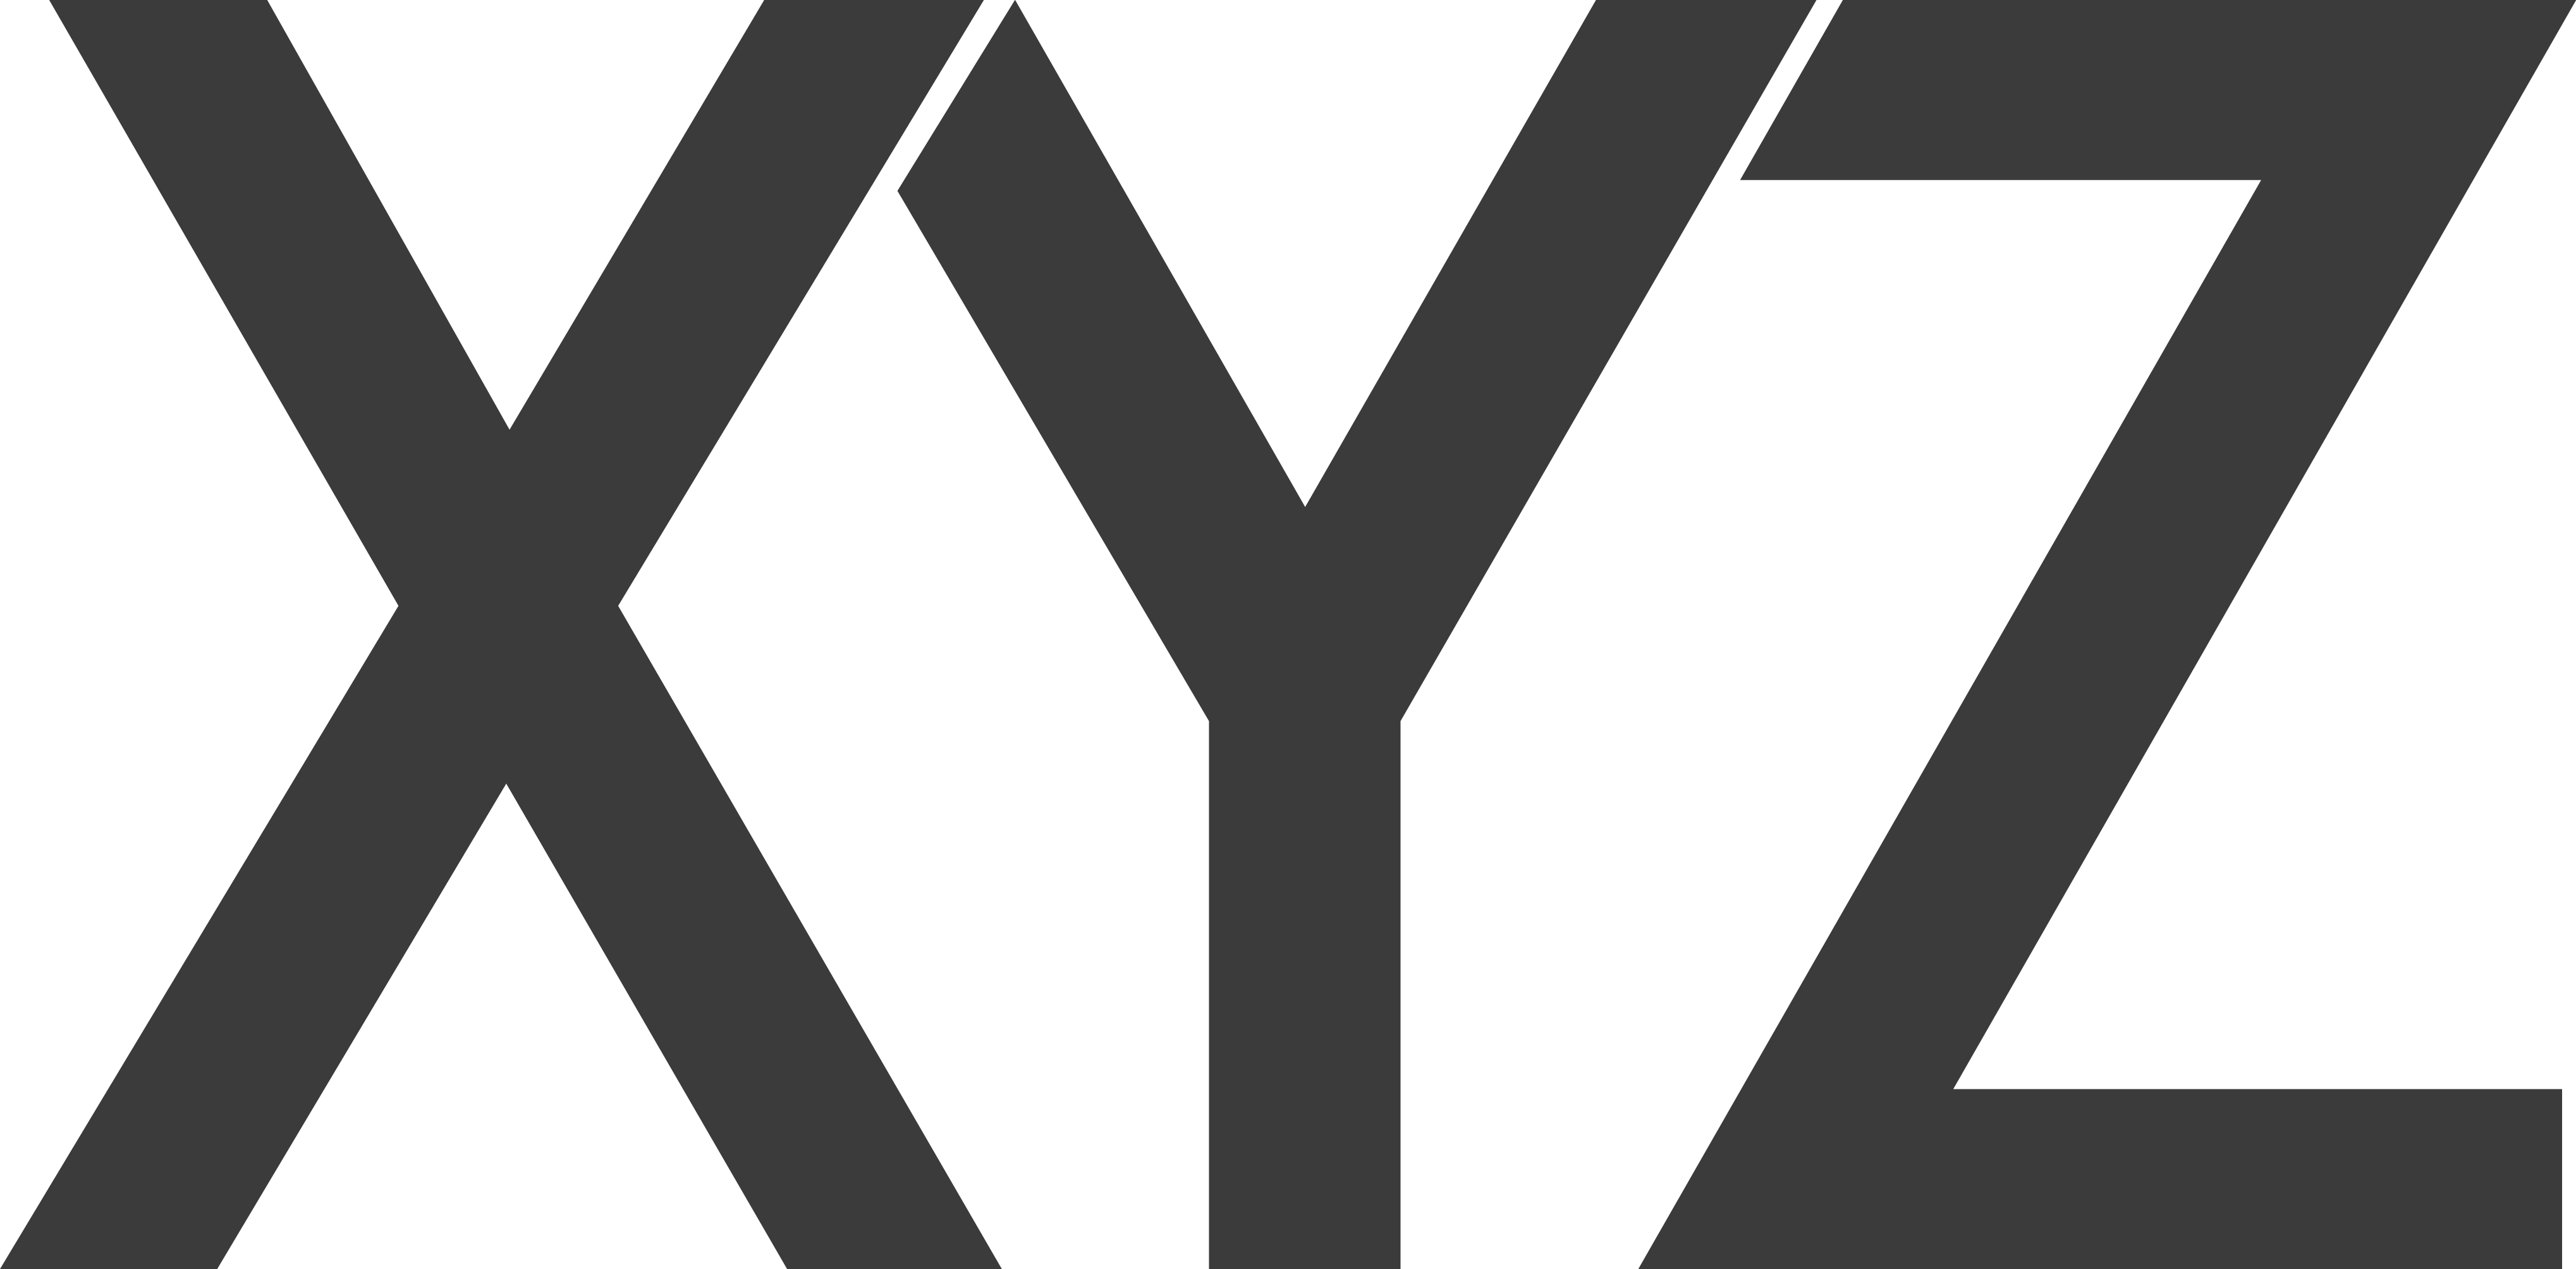 Рџ й е ѕ рџ. Логотип x. Эмблема Зет. Логотип с буквой x. Xyz логотип.